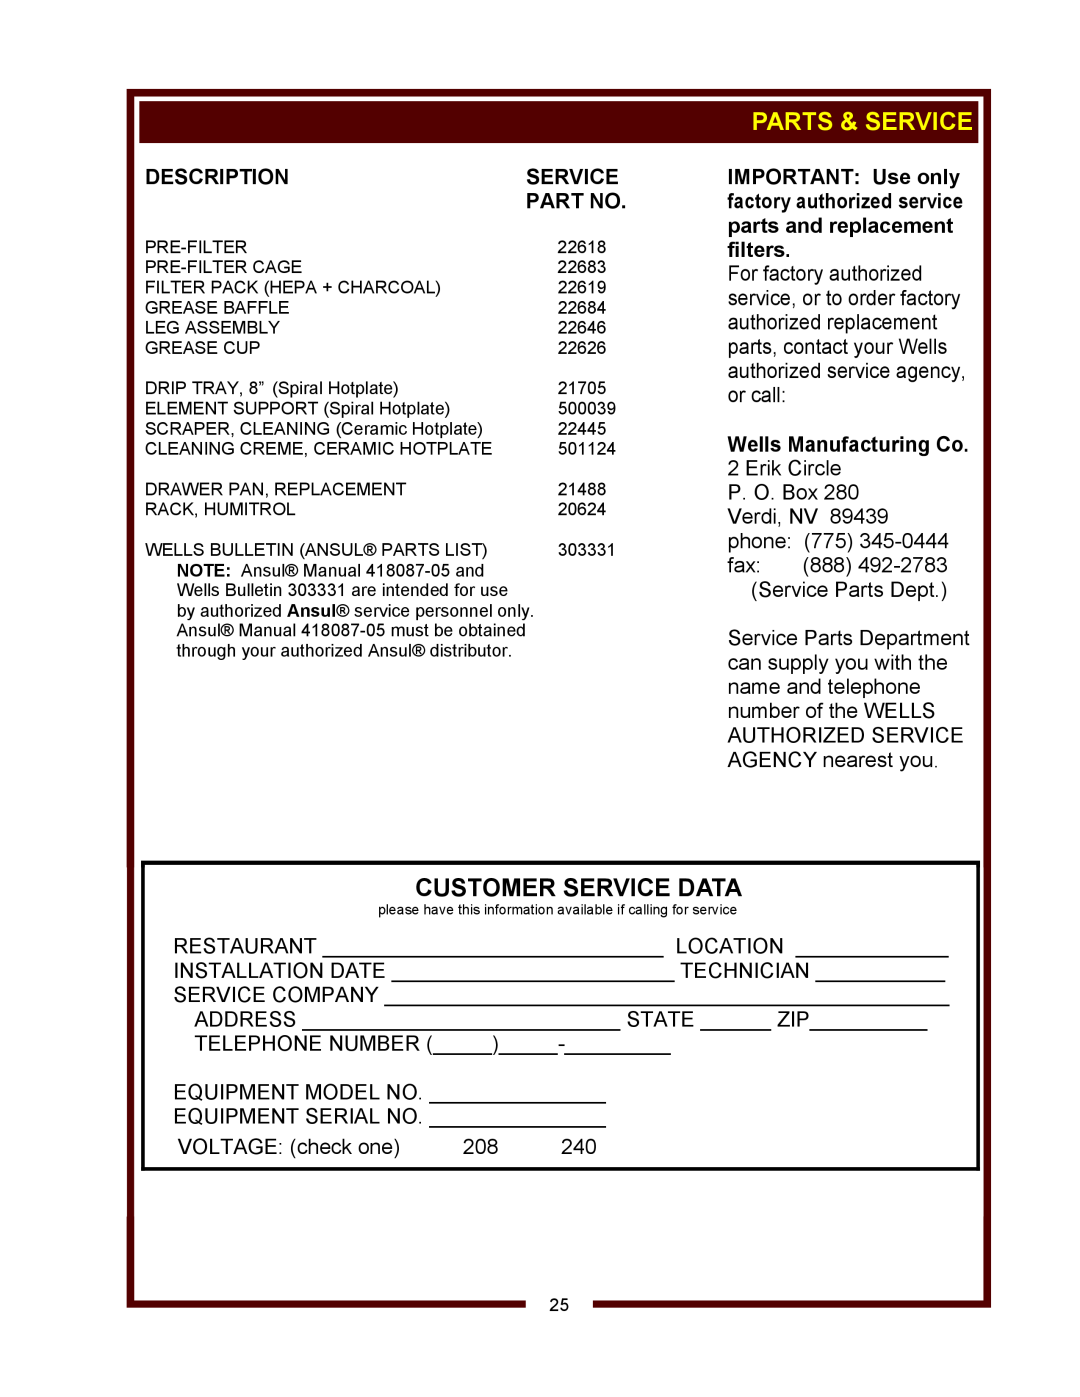 Wells WV-4HSRW operation manual Parts & Service, Customer Service Data, Description, Wells Manufacturing Co 